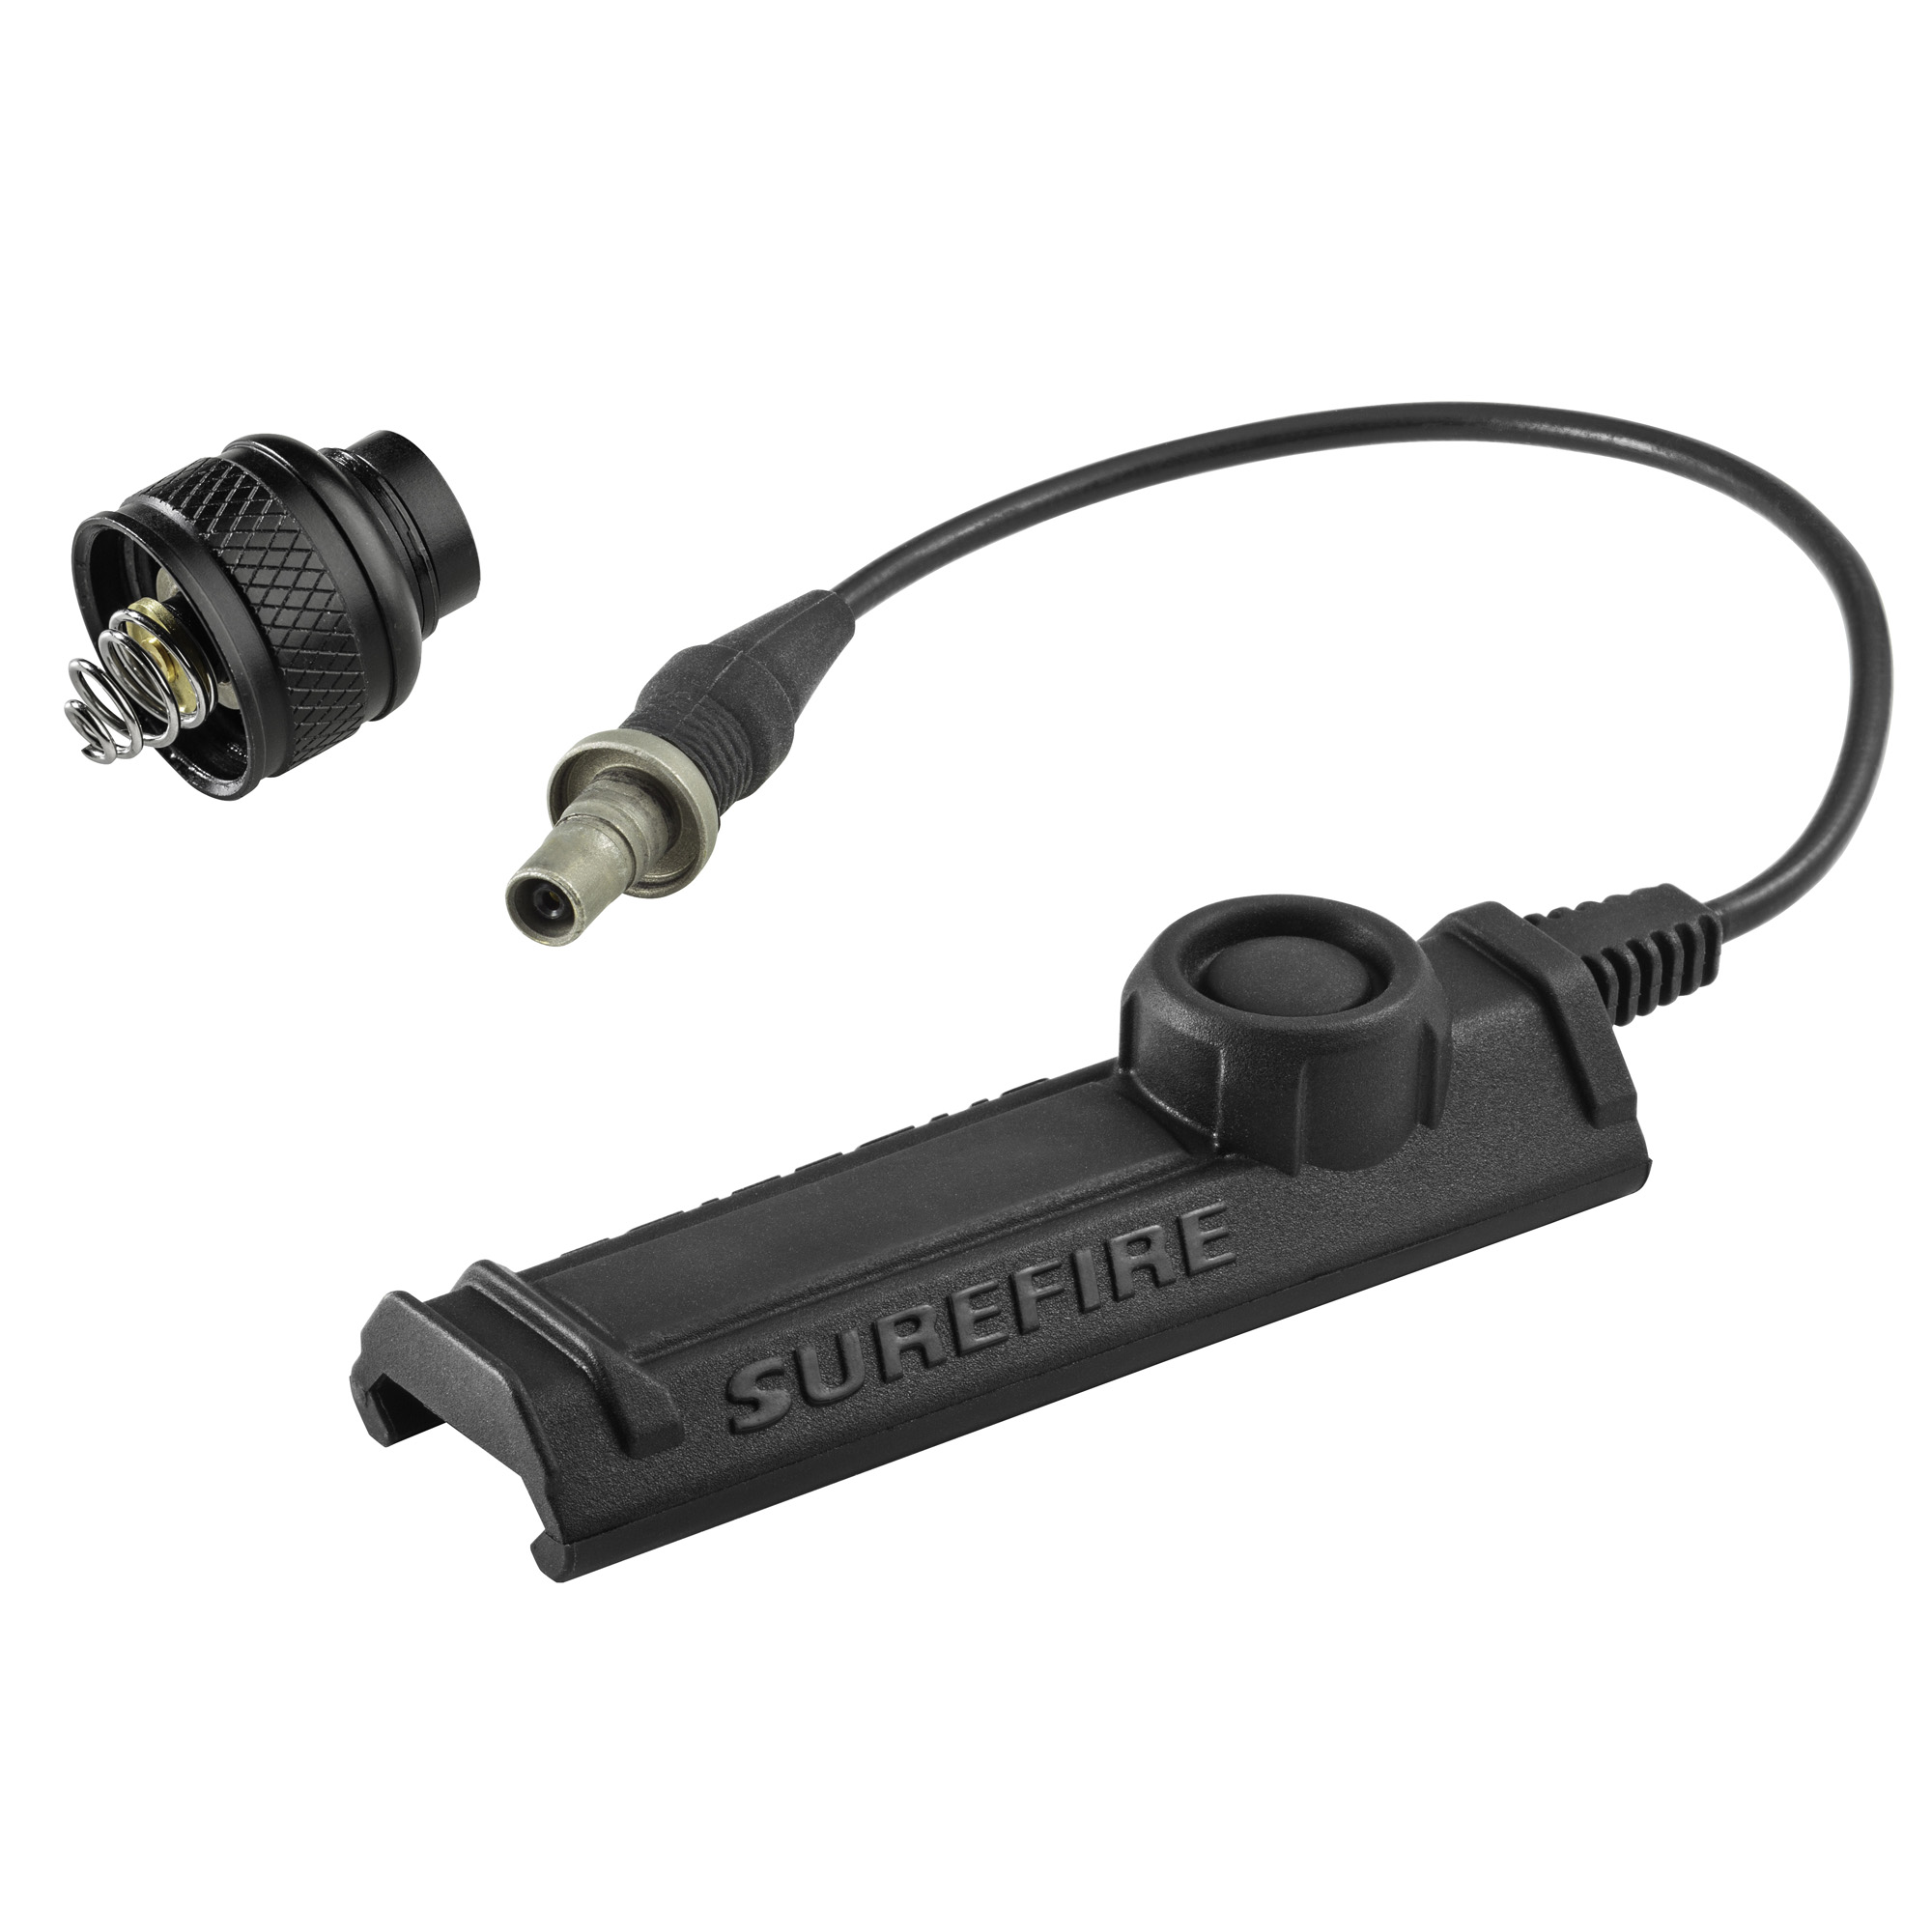 SureFire SR07 Remote Dual Switch and UE Tailcap (UE-SR07-BK)